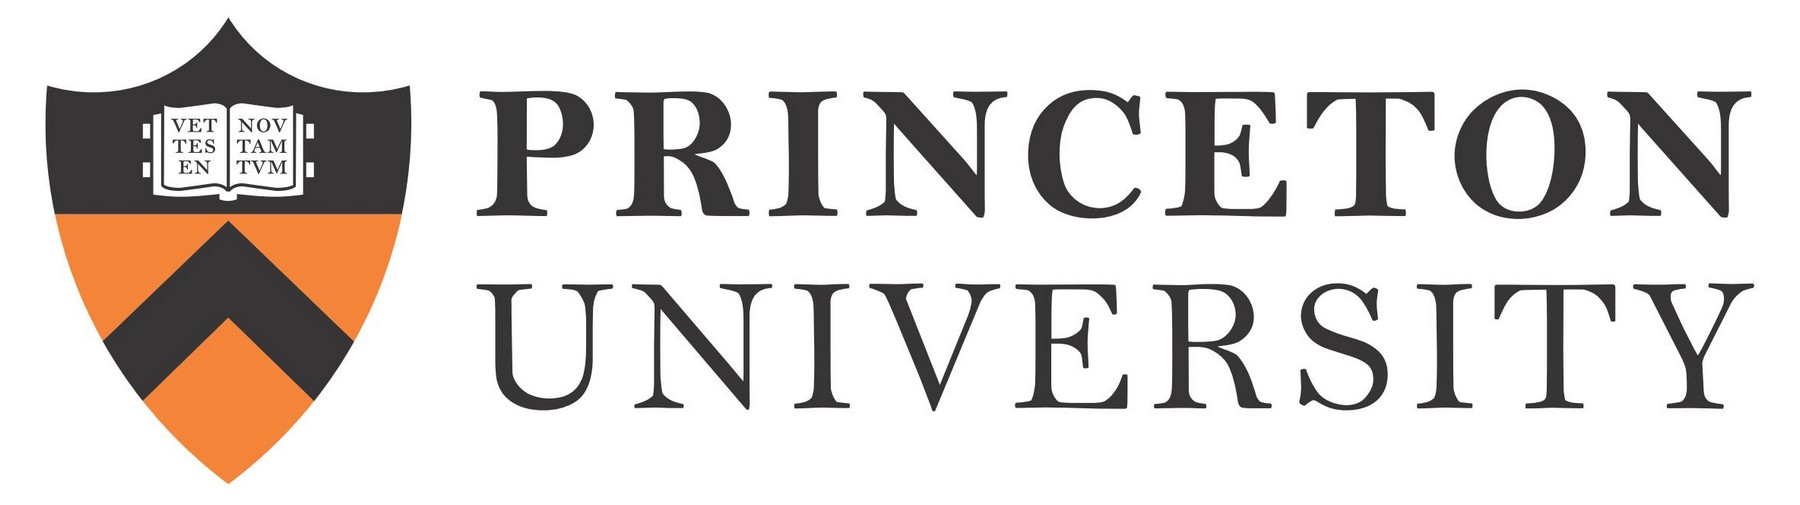 princeton-university-logo.jpg